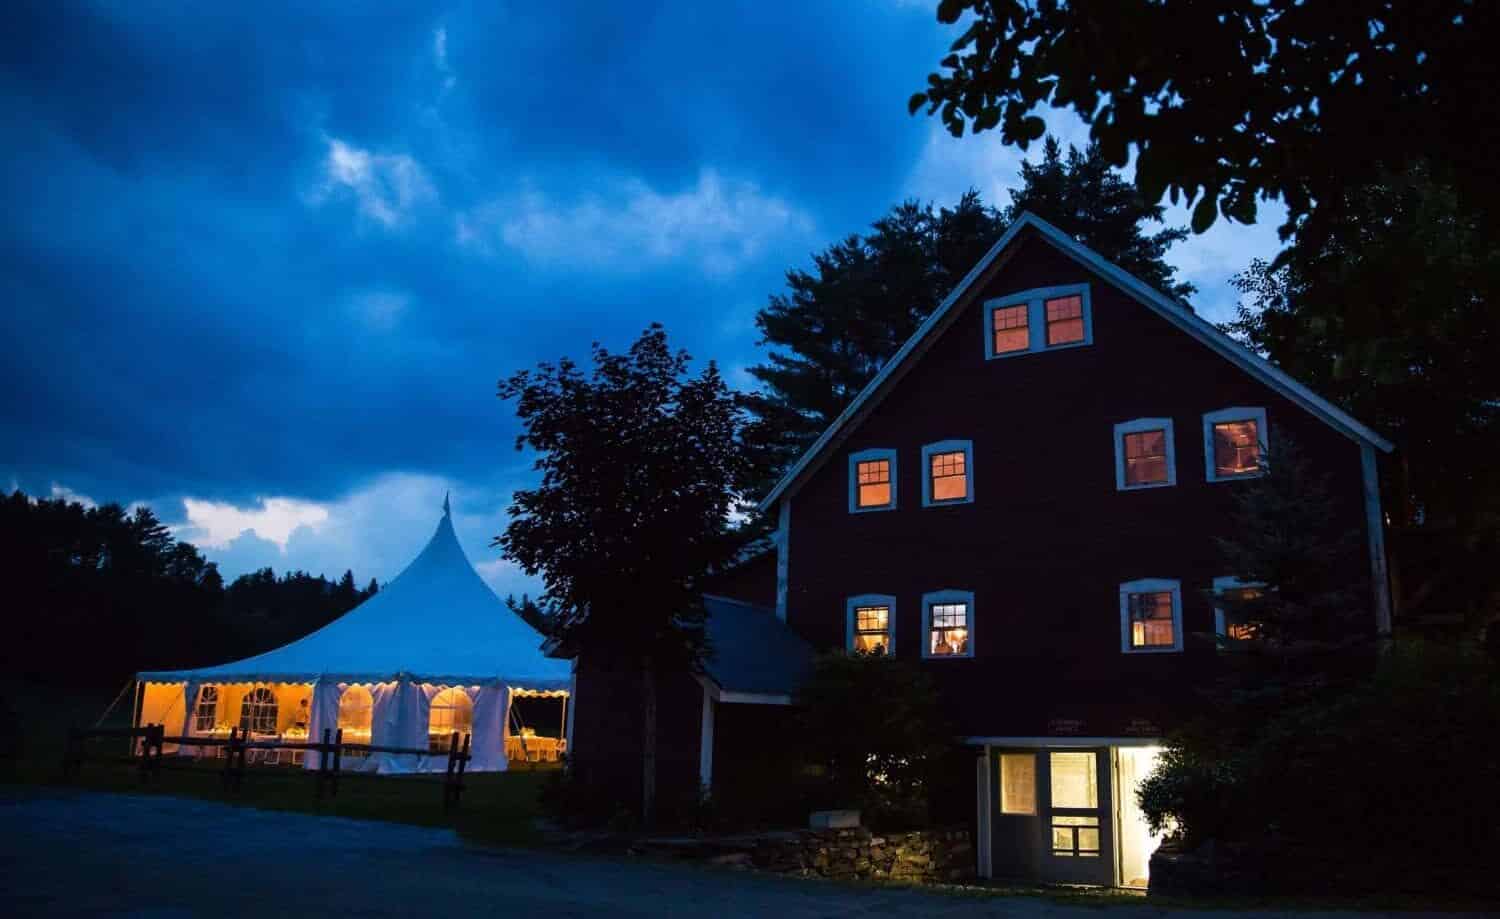 1824 House Inn + Barn - Nighttime Exterior with Event Tent